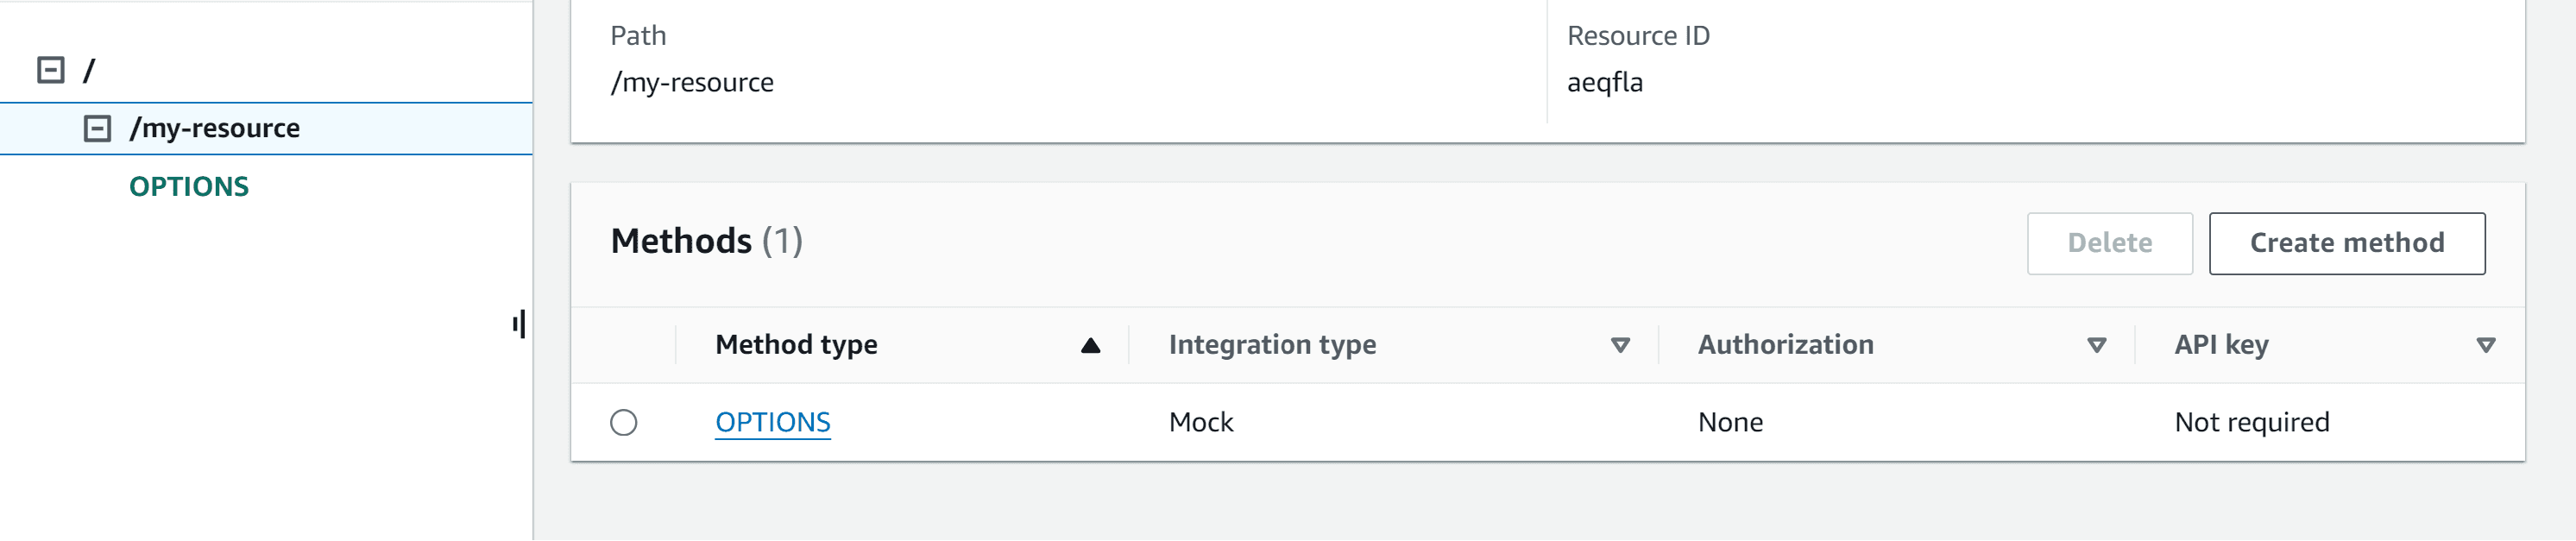 Create API gateway create method button